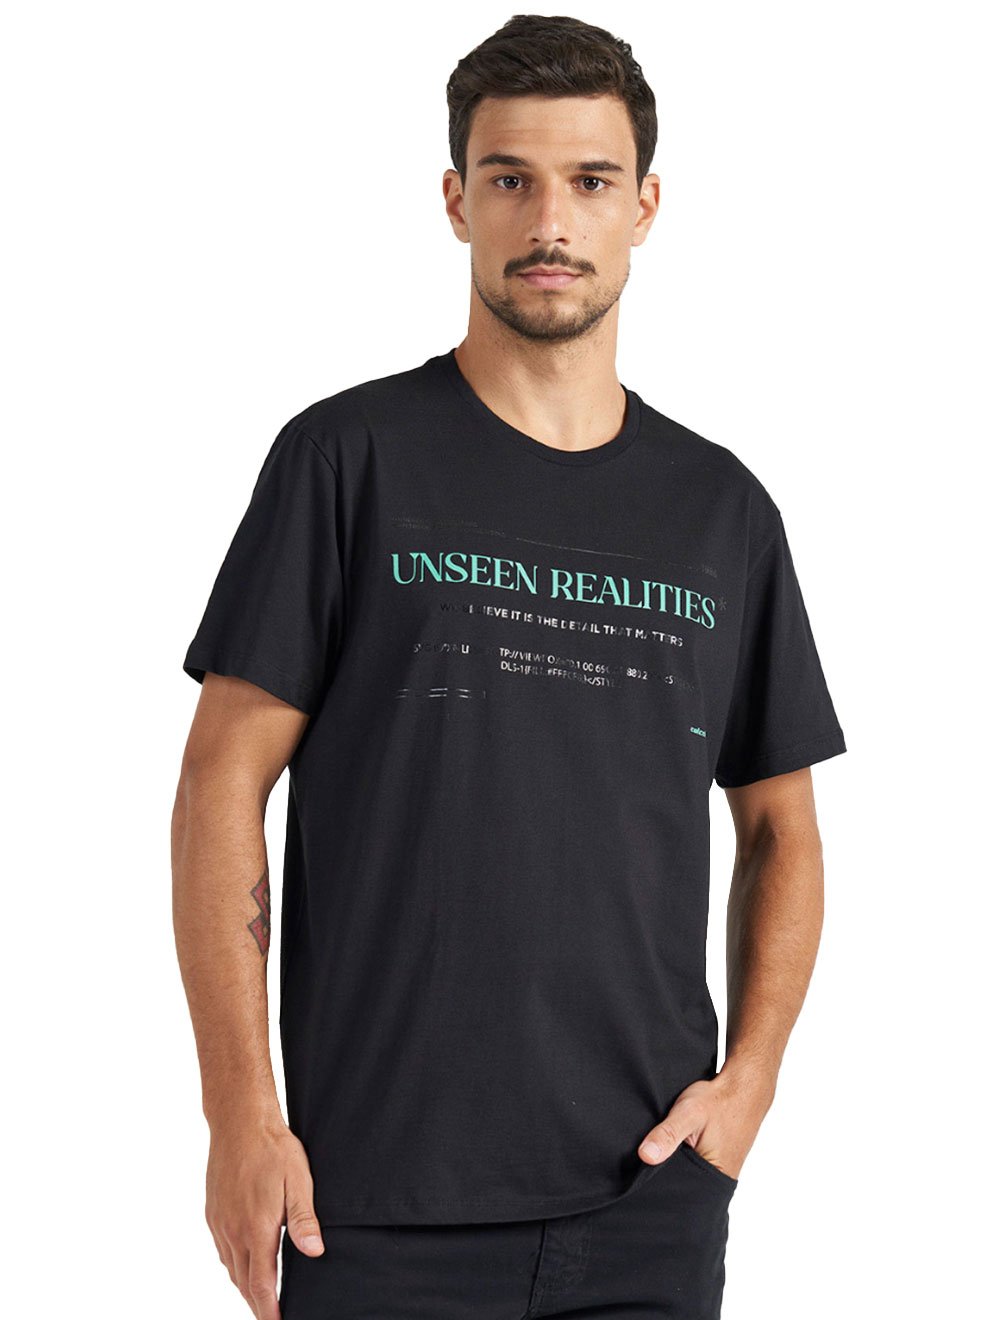 Camiseta Colcci Masculina Regular Unseen Realities Preta